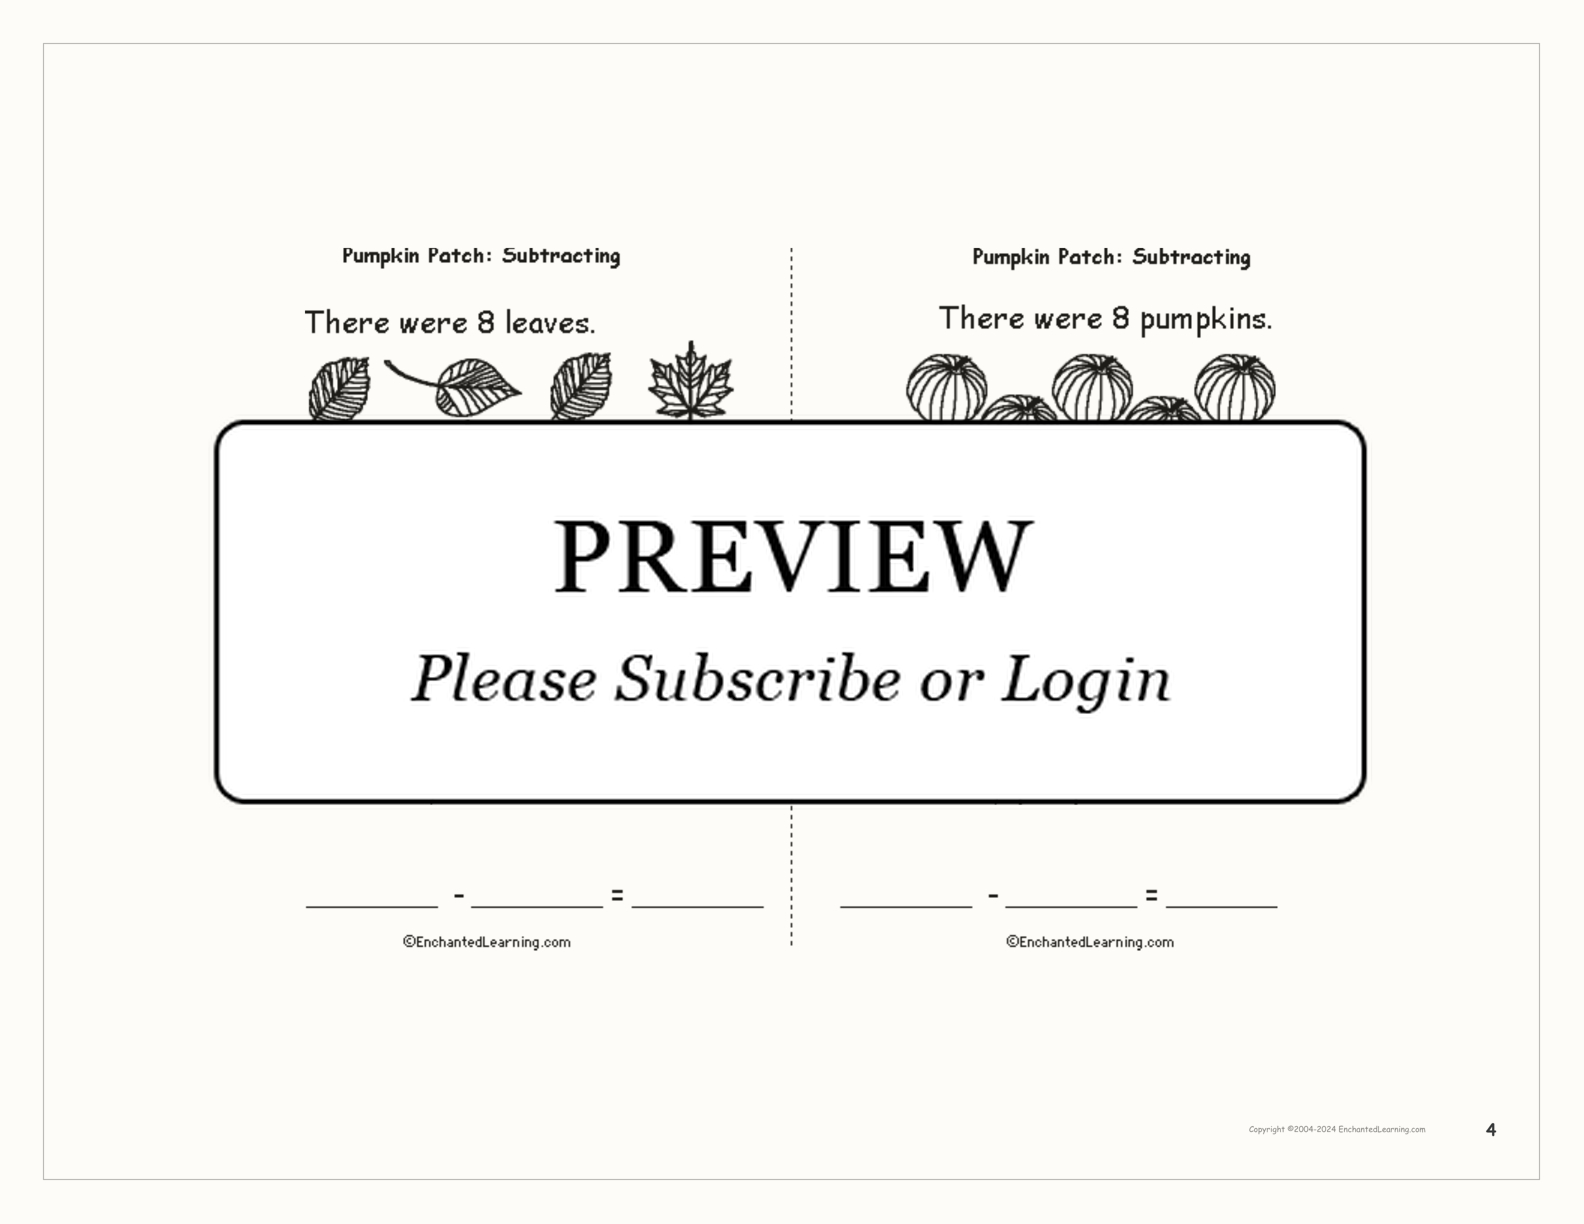 Pumpkin Patch: Subtracting interactive printout page 4